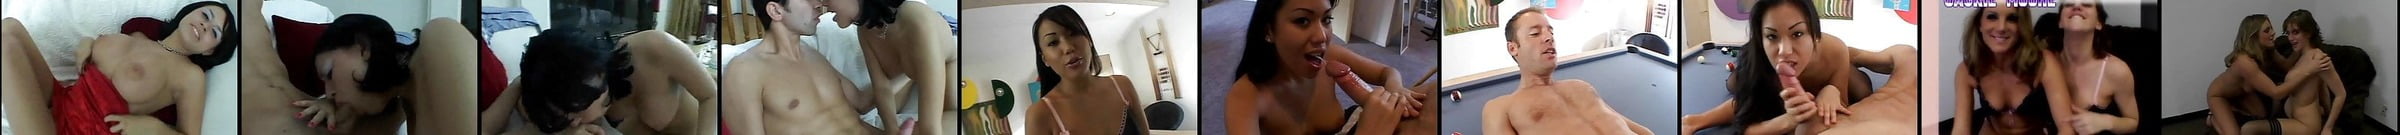 Avena Lee Free Porn Star Videos 48 Xhamster